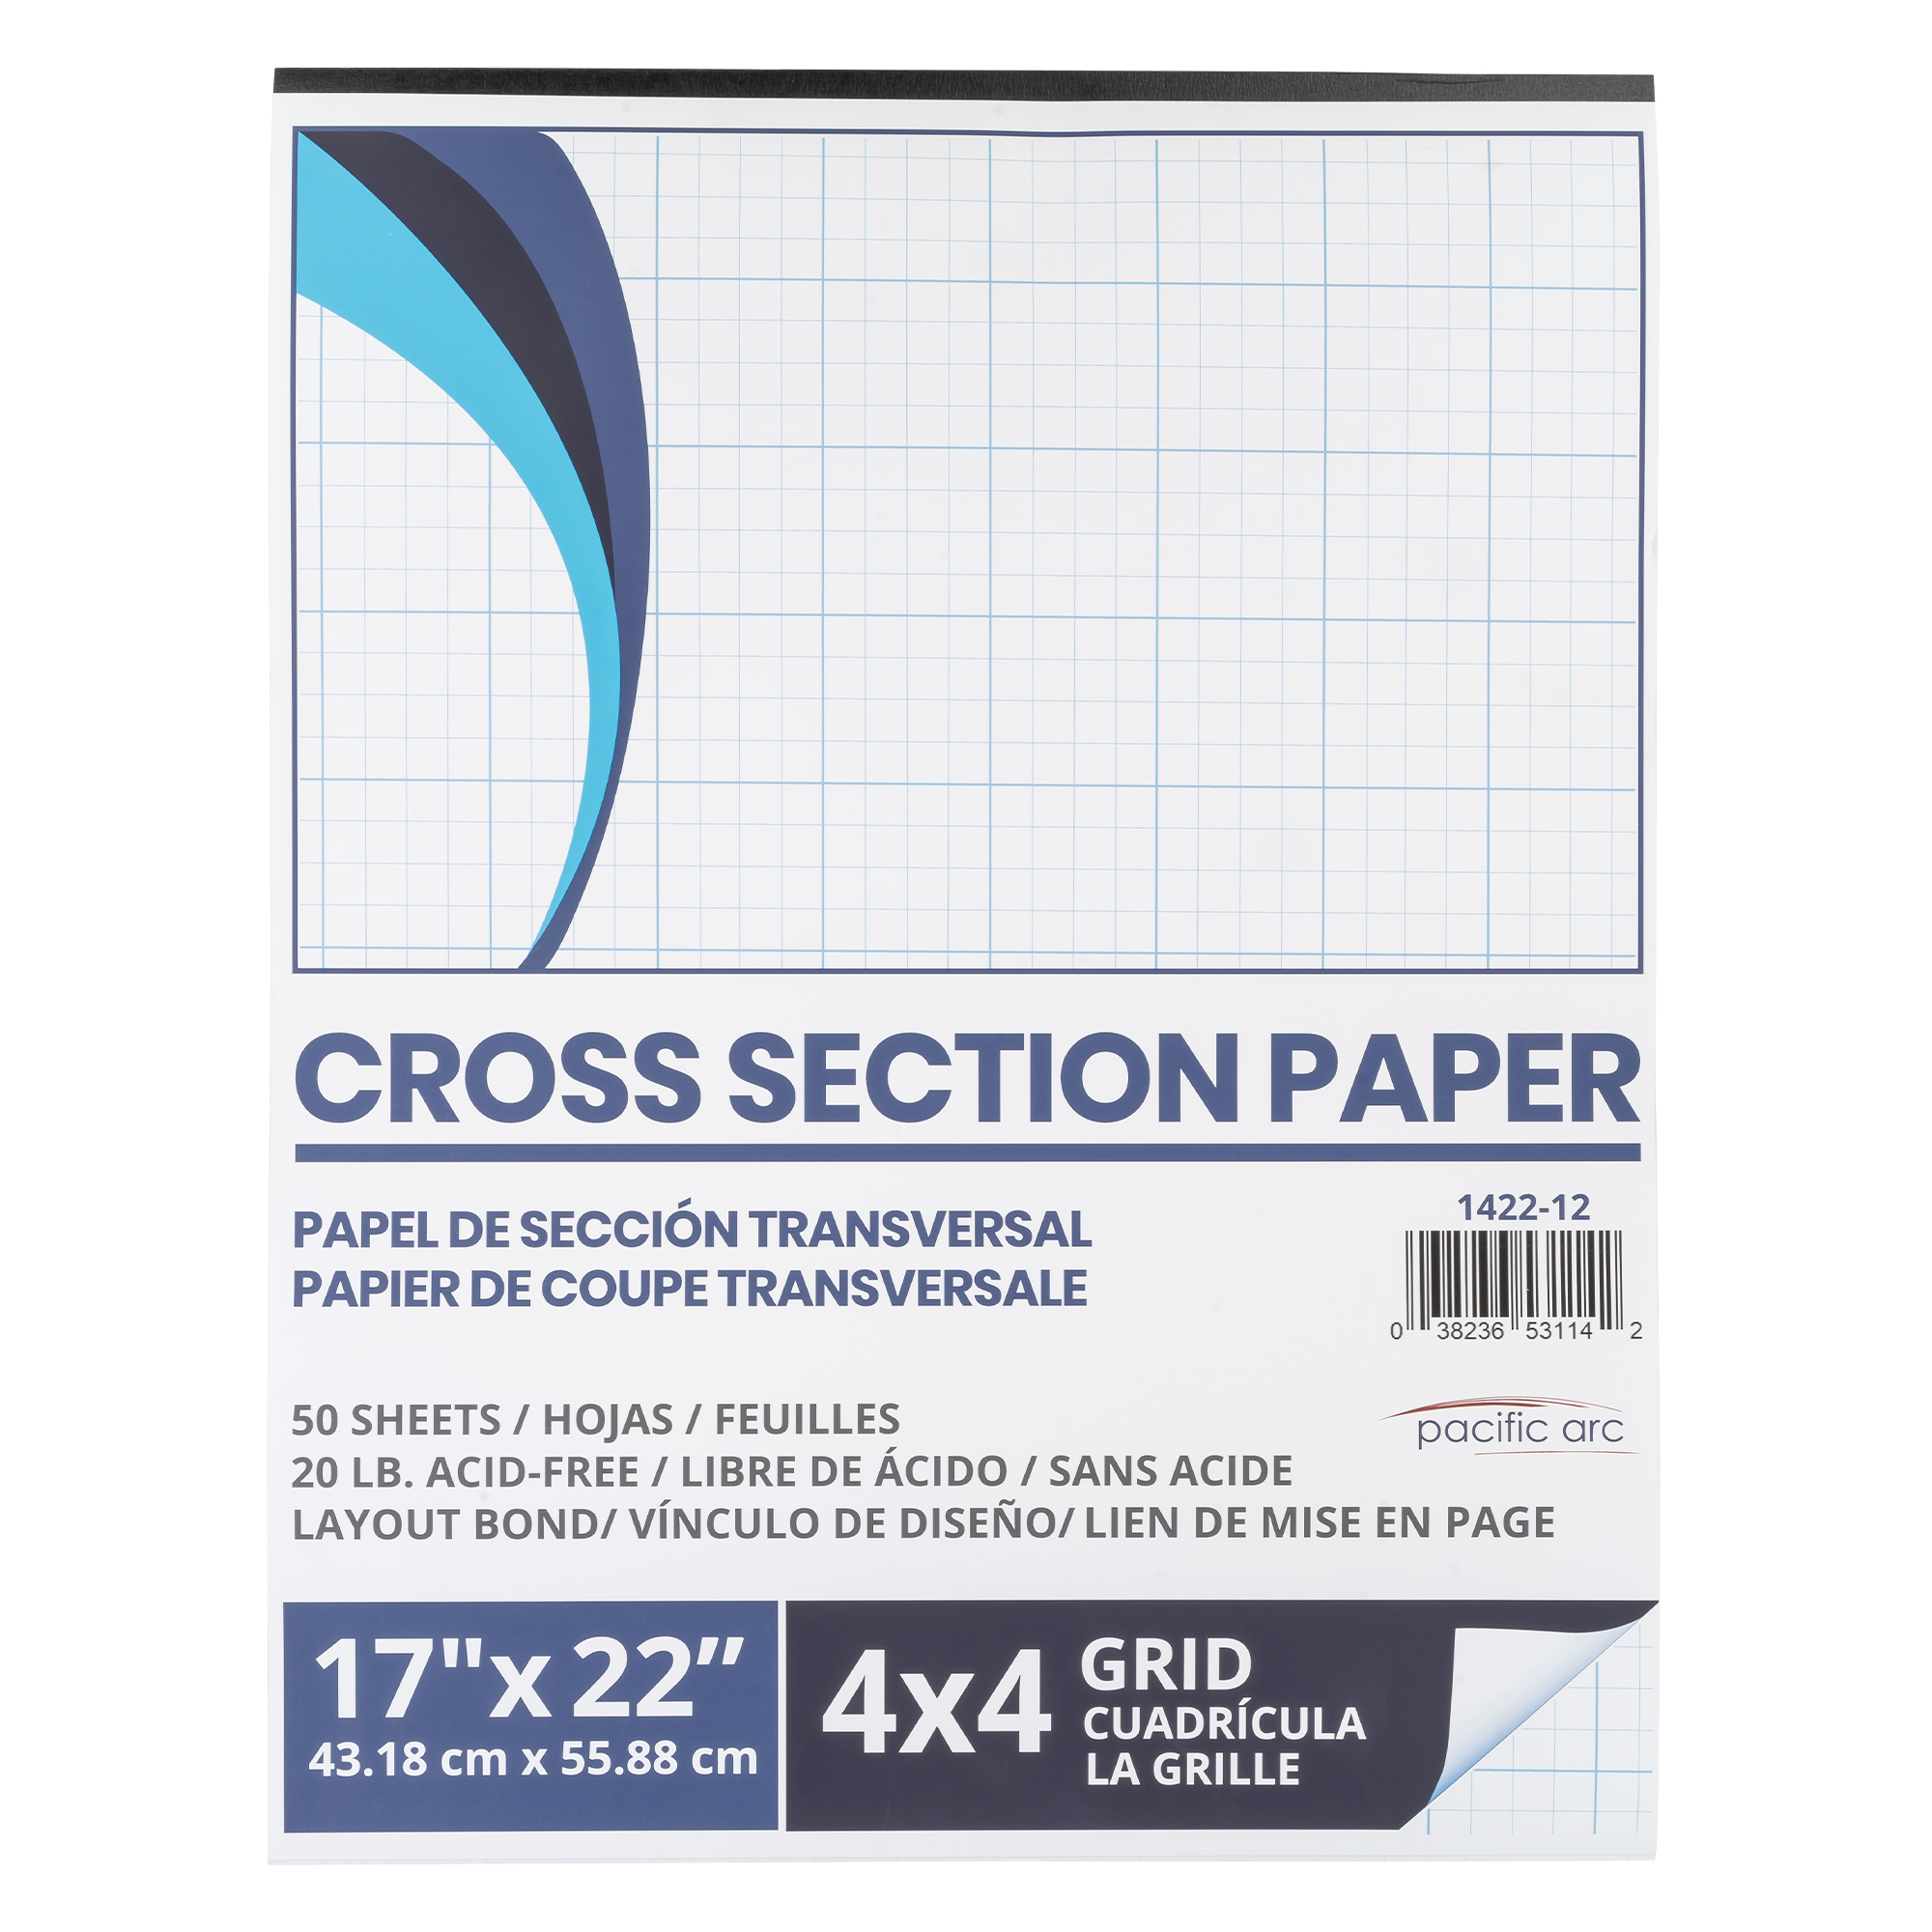 4x4 Cross Section Layout Bond - 1422-02